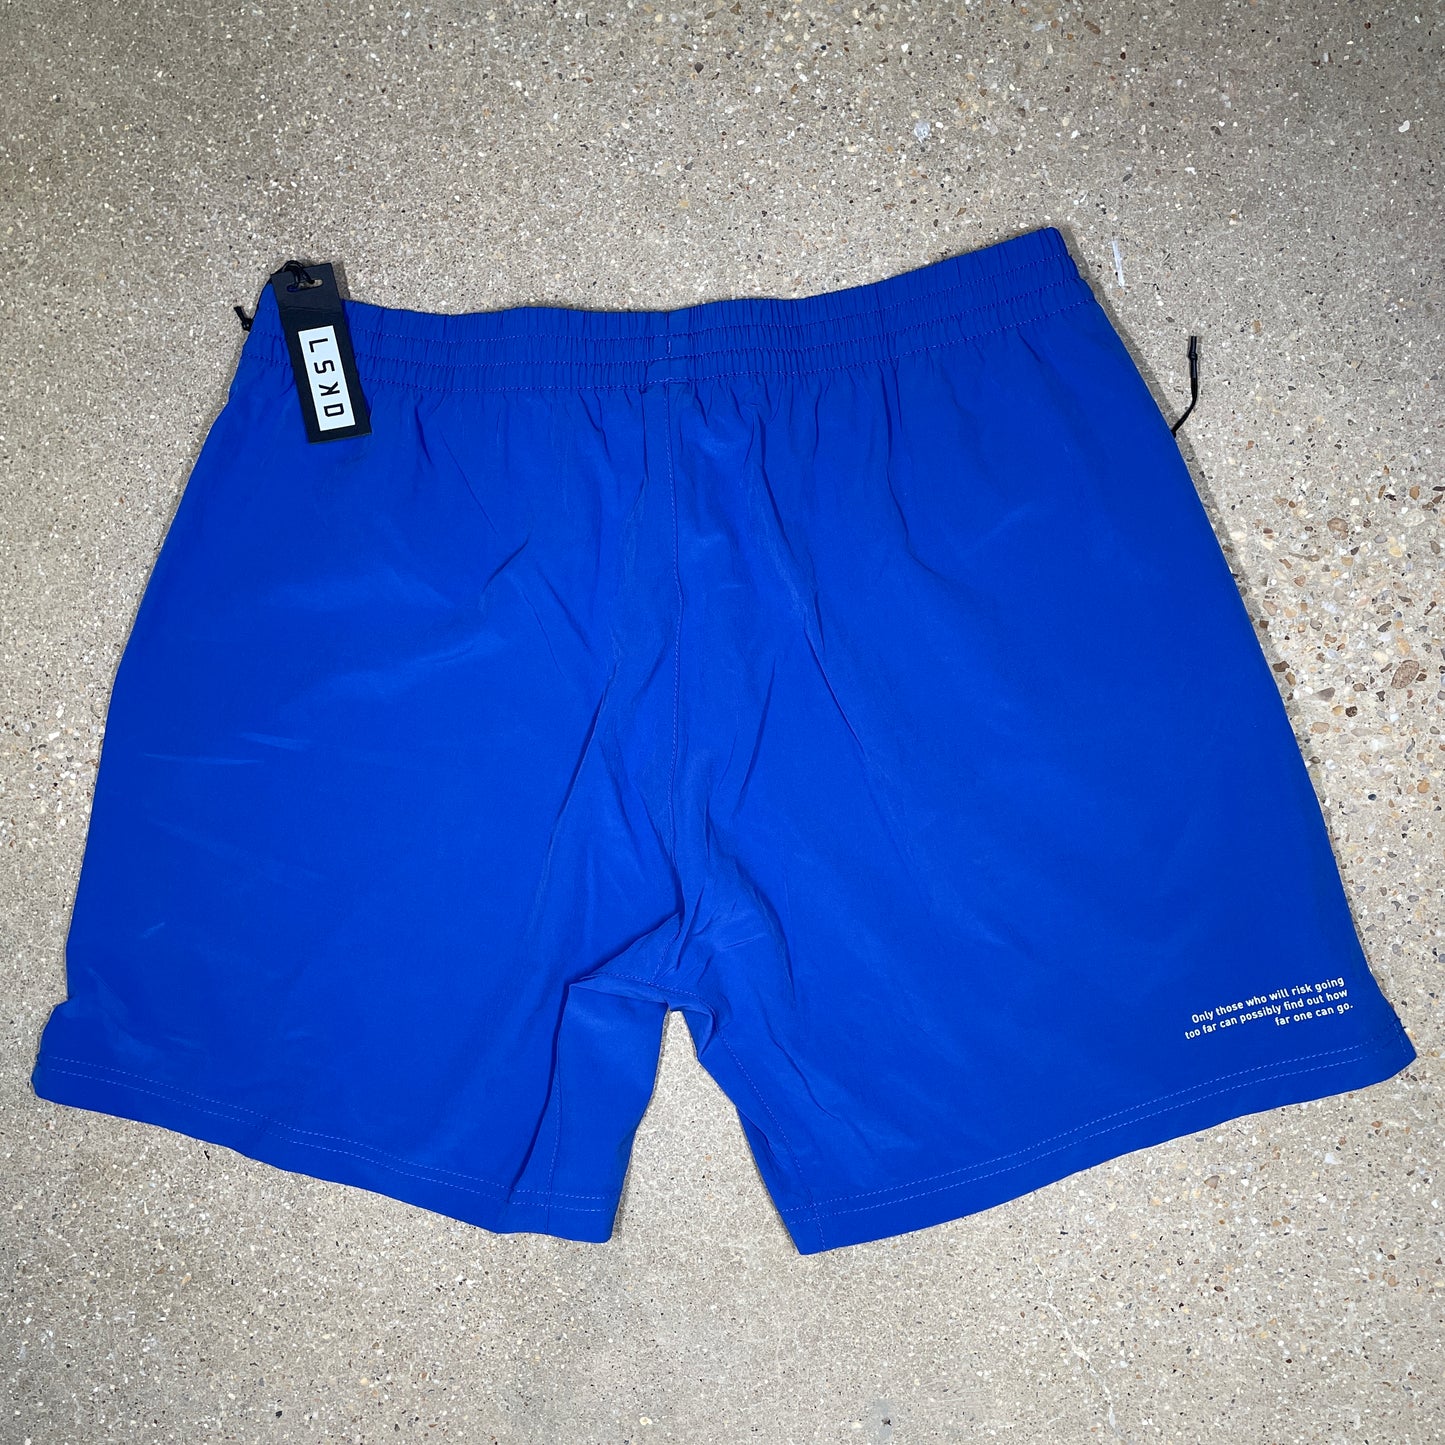 Blue Dryfit Shorts | LSKD | Mens | Invictus Washington DC